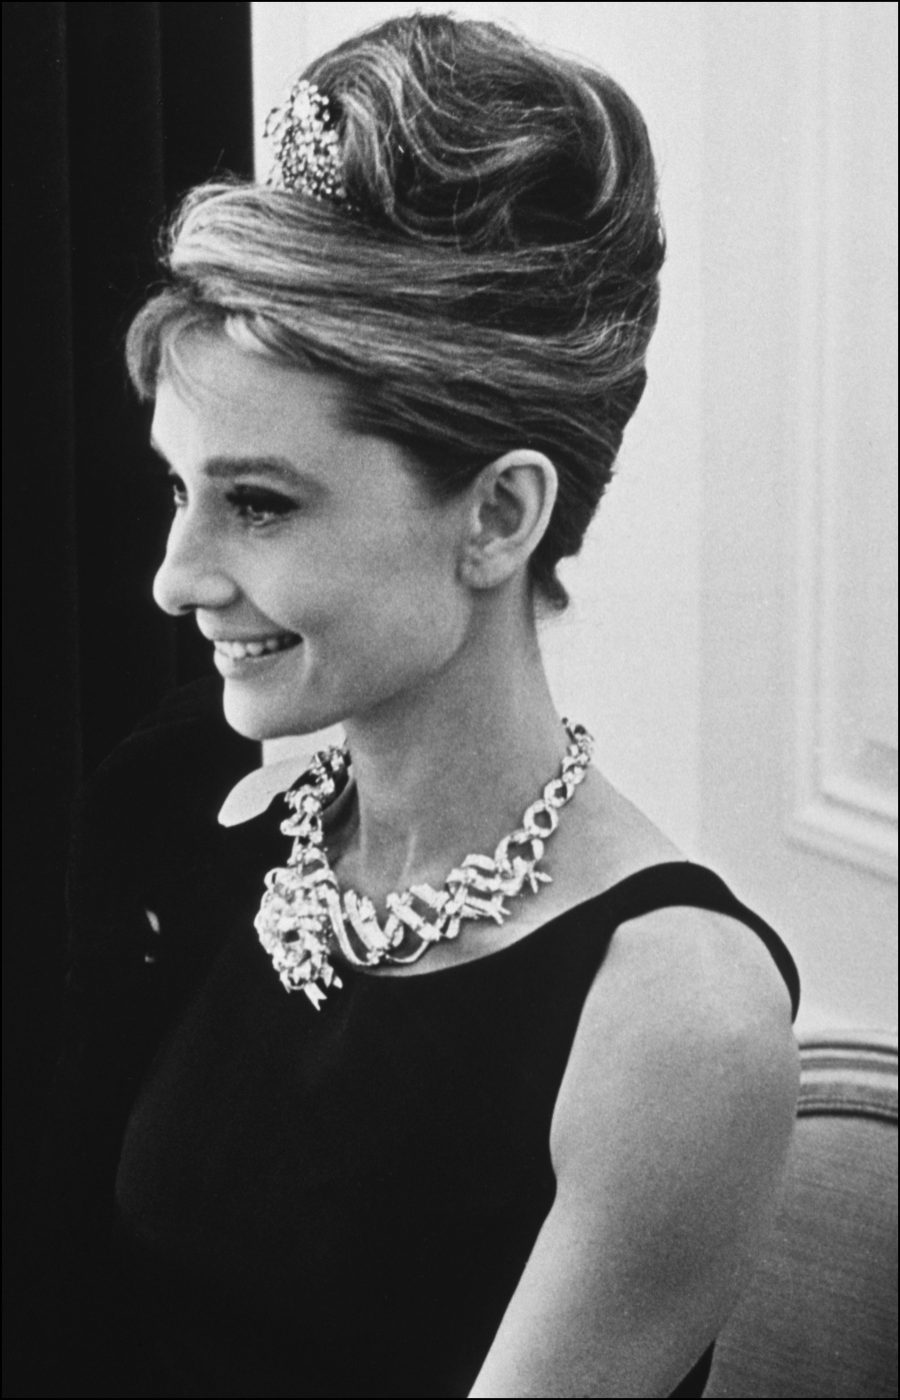 Audrey Hepburn wears Schlumberger's Ribbon Rosette necklace set in 1955